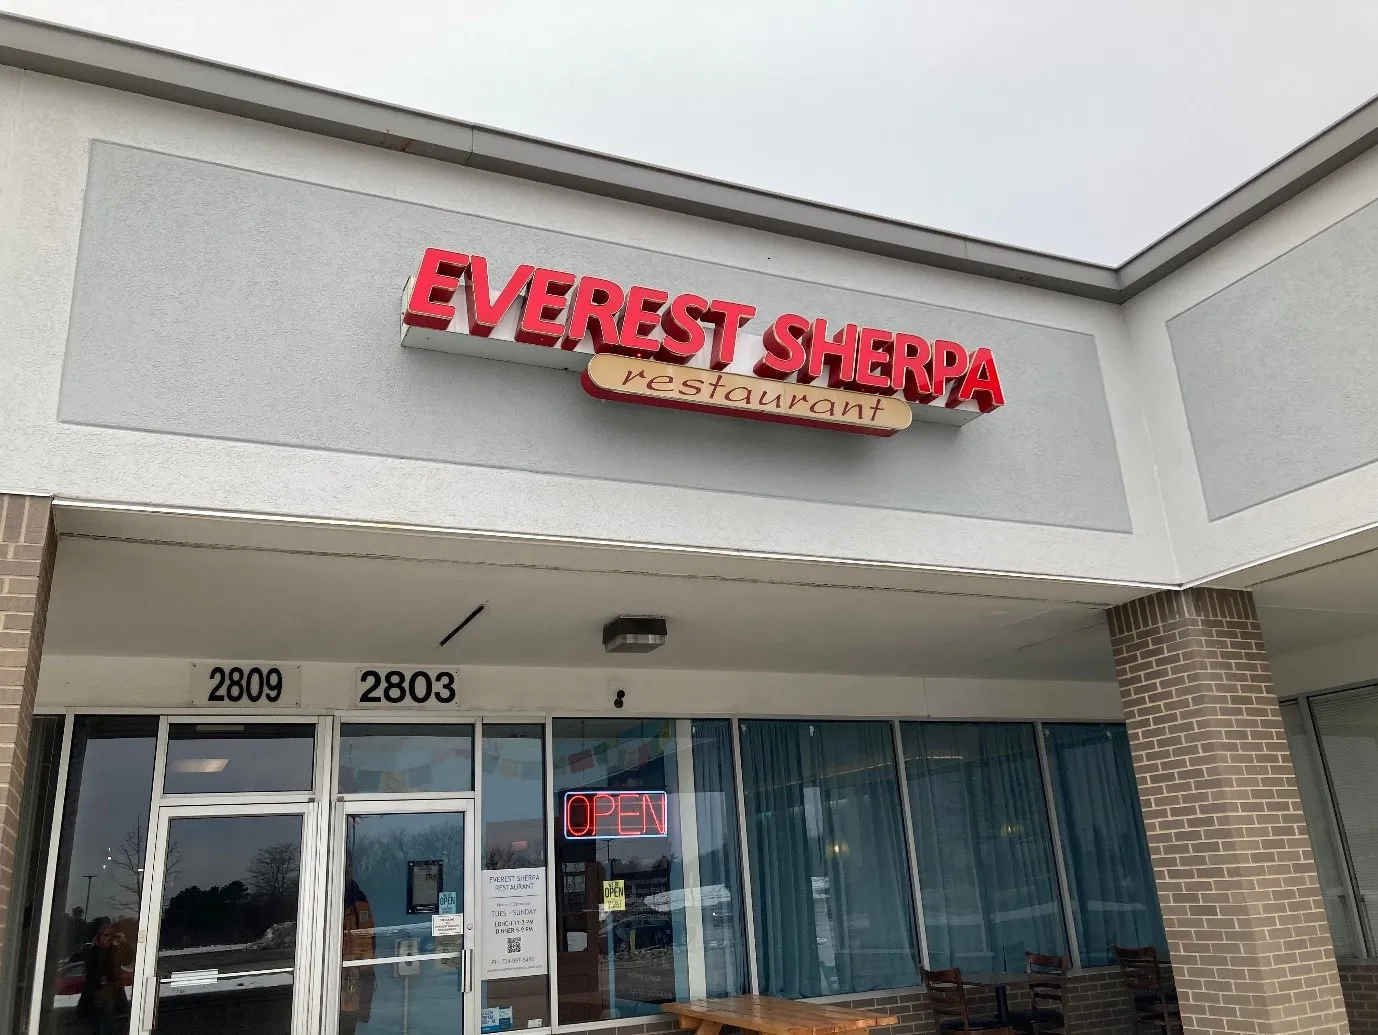 everest-sherpa-restaurant-front